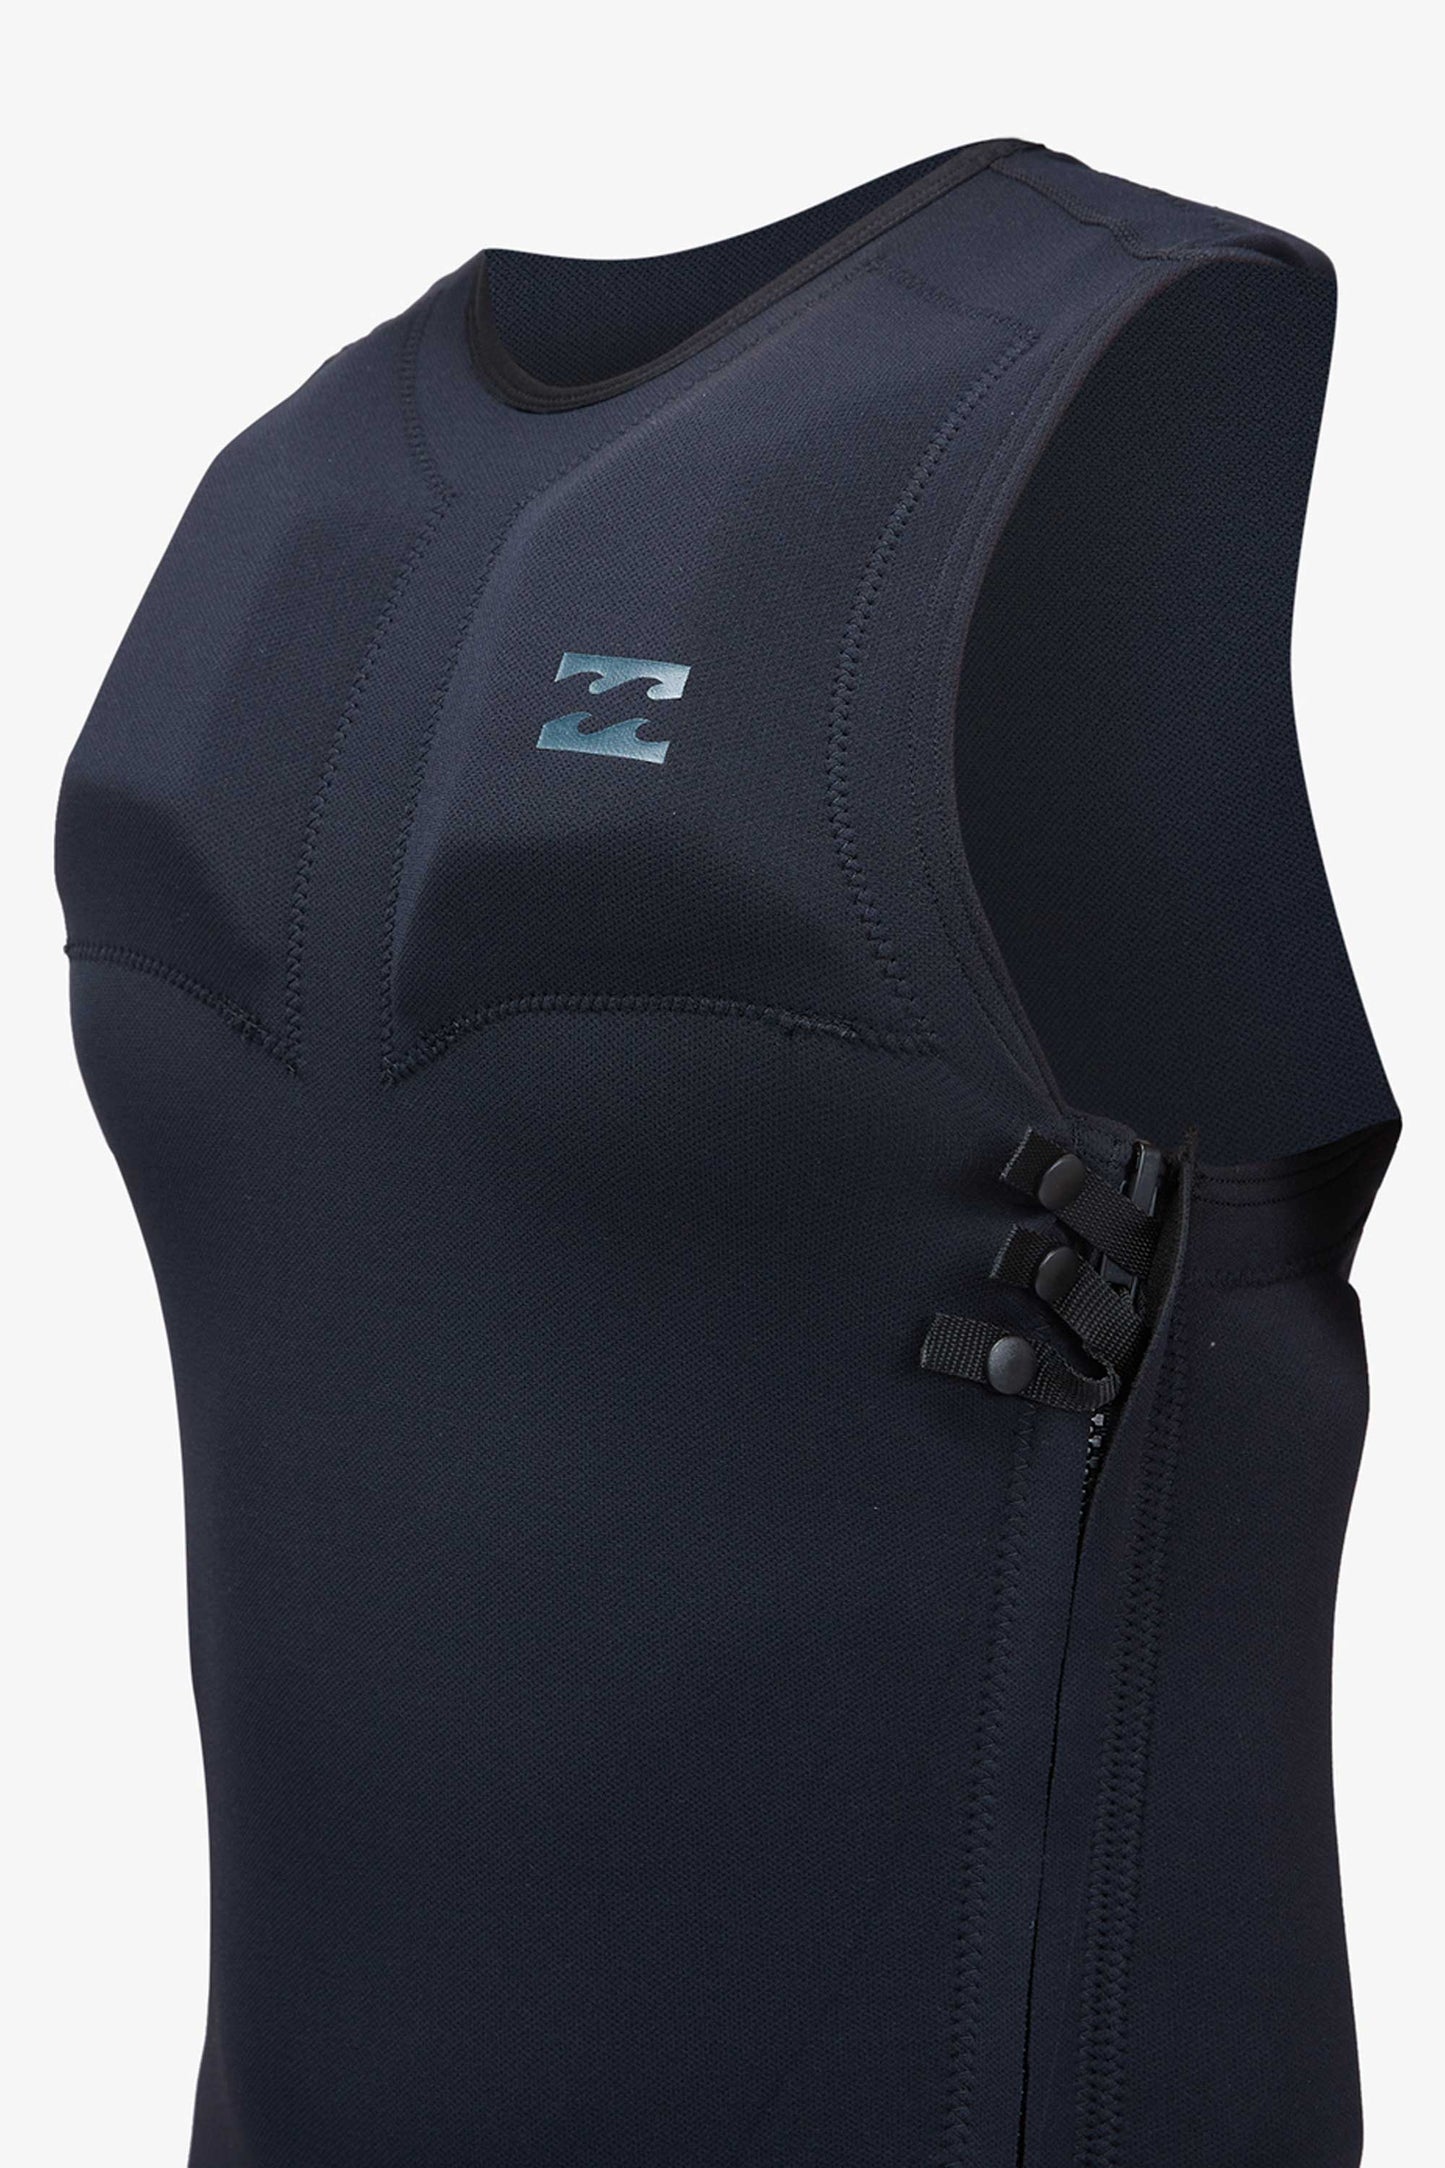 
                  
                    Pukas-Surf-Shop-Billabong-wetsuit-2-2-impact-man-black
                  
                